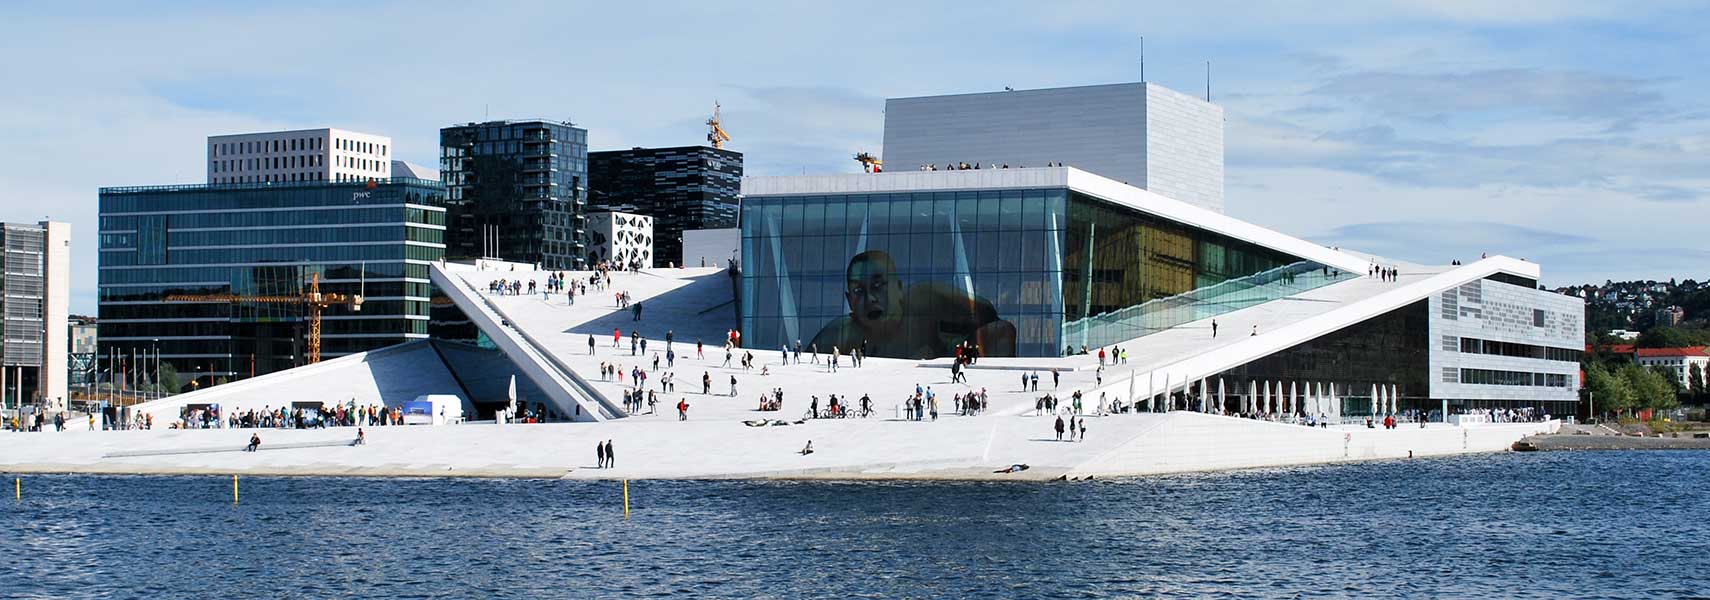 Oslo Opera House at Kirsten Flagstads Plass